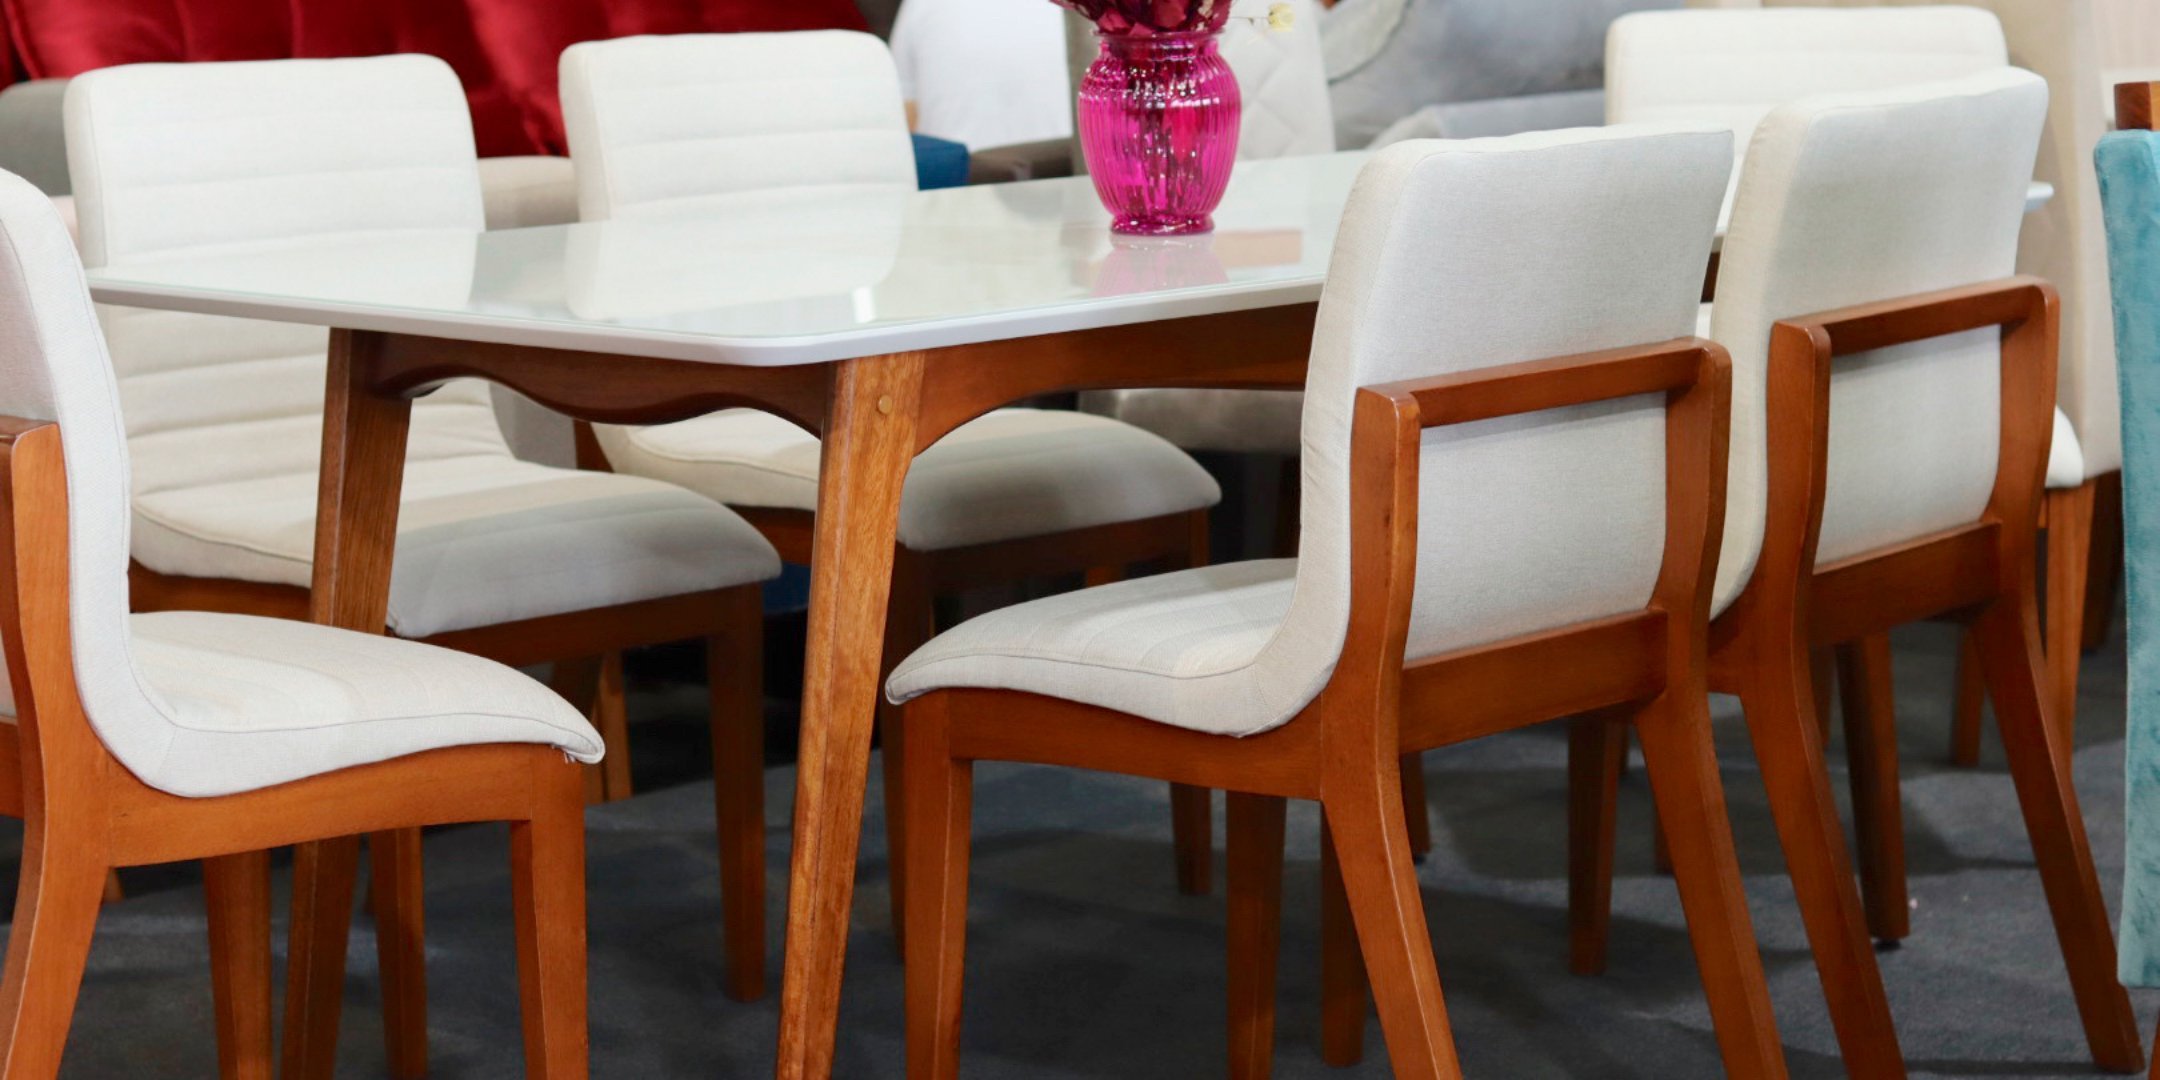 Sala de Jantar Completa com 6 Cadeiras Madeira Maciça 1,80x0,90 Metros - Petra - Art Salas - 5